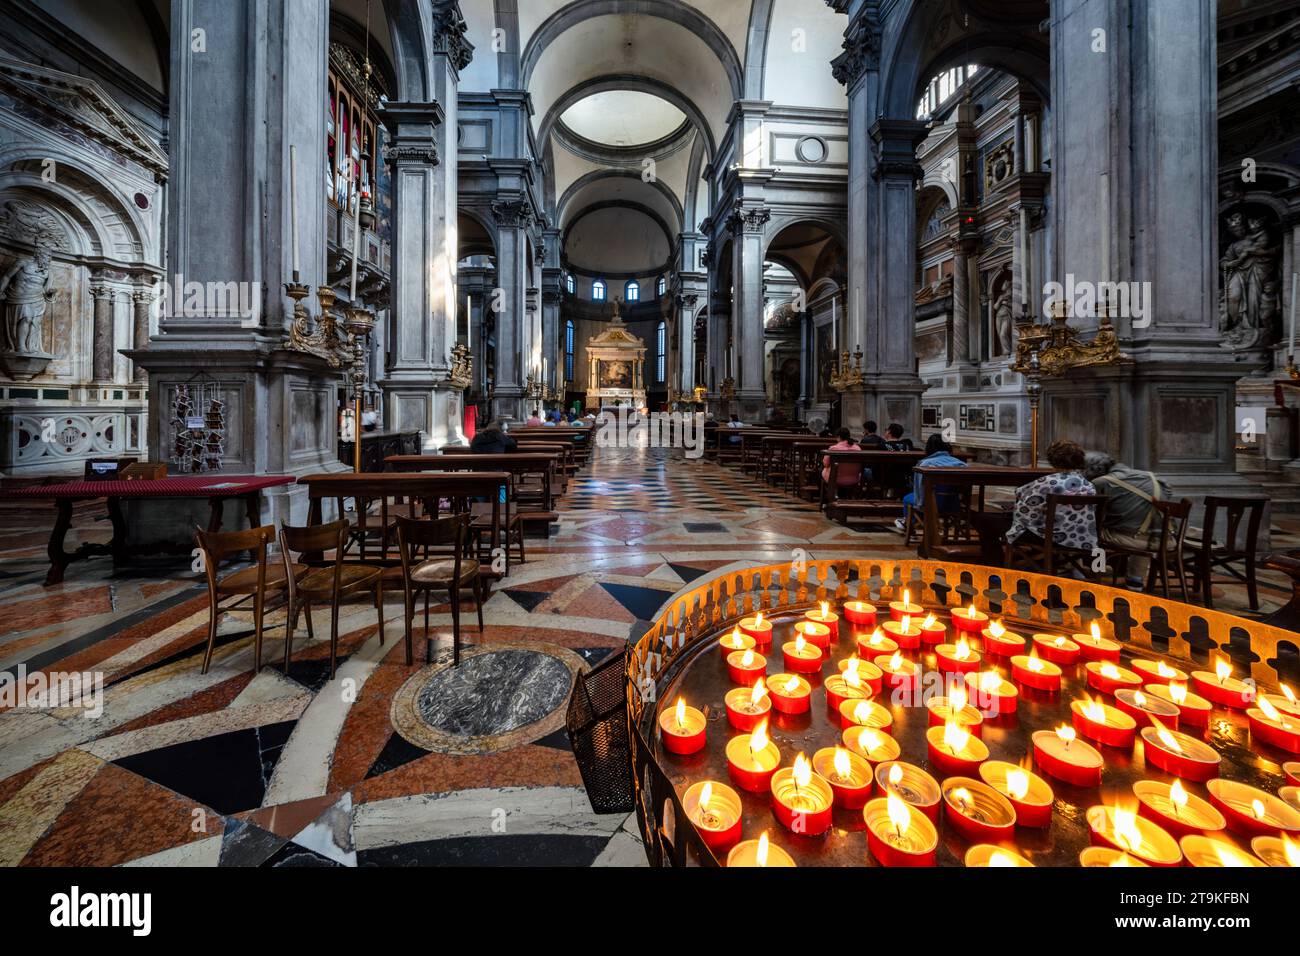 Inside a church in Venice, Italy Stock Photo